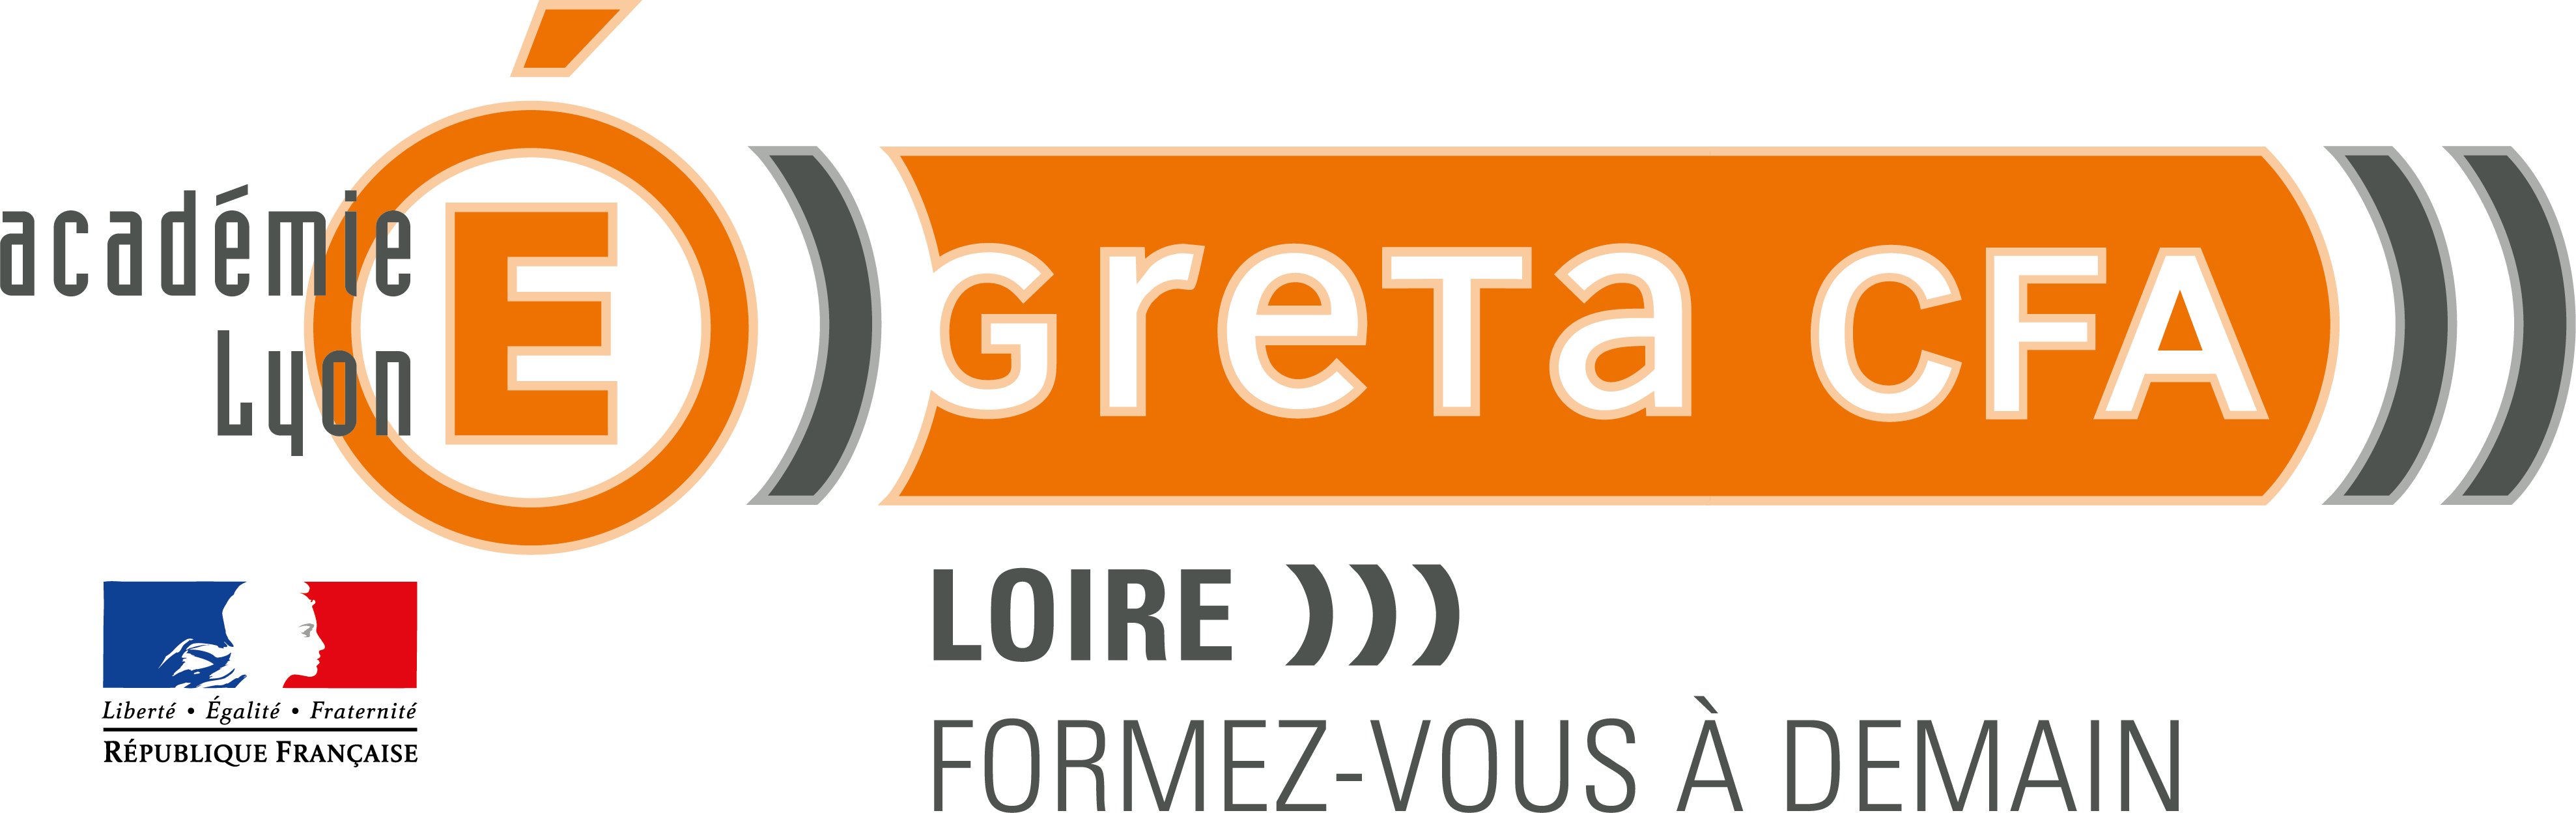 Le Greta CFA de Saint-Étienne